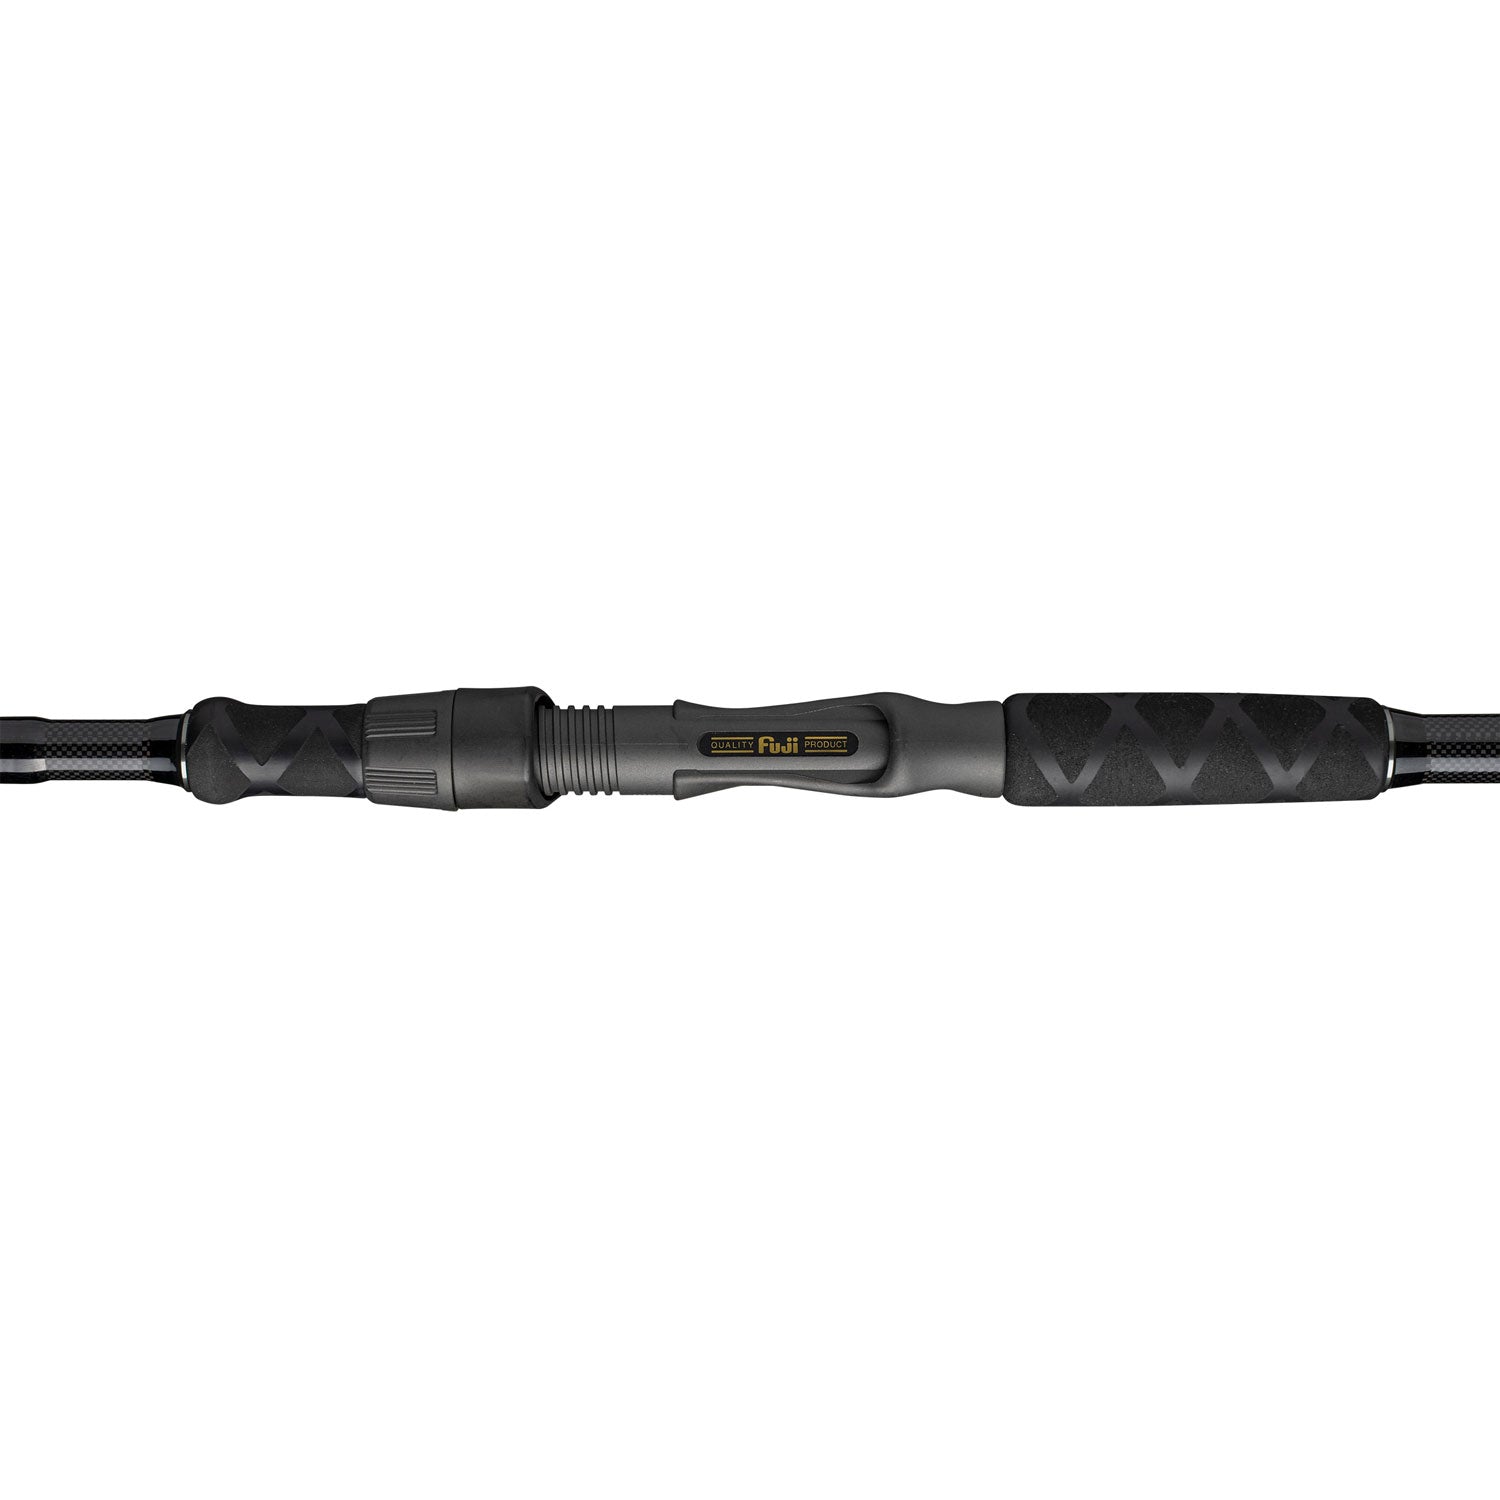 Vexan Strikeback Bass Fishing Rod, Casting 6'10 inch Medium, Mod